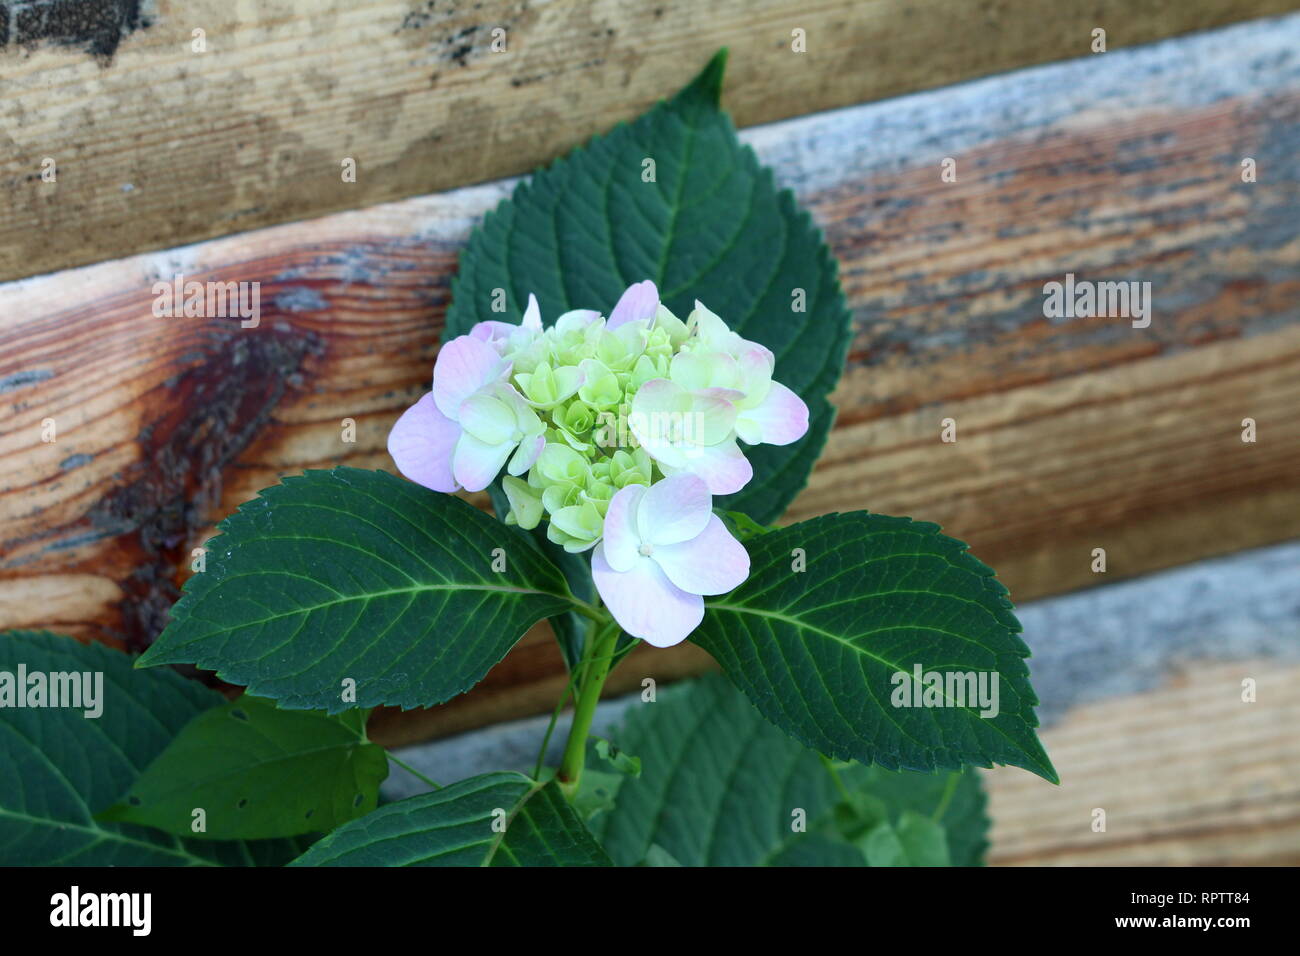 Hydrangea Or Hortensia Garden Shrub With Multiple White Pink